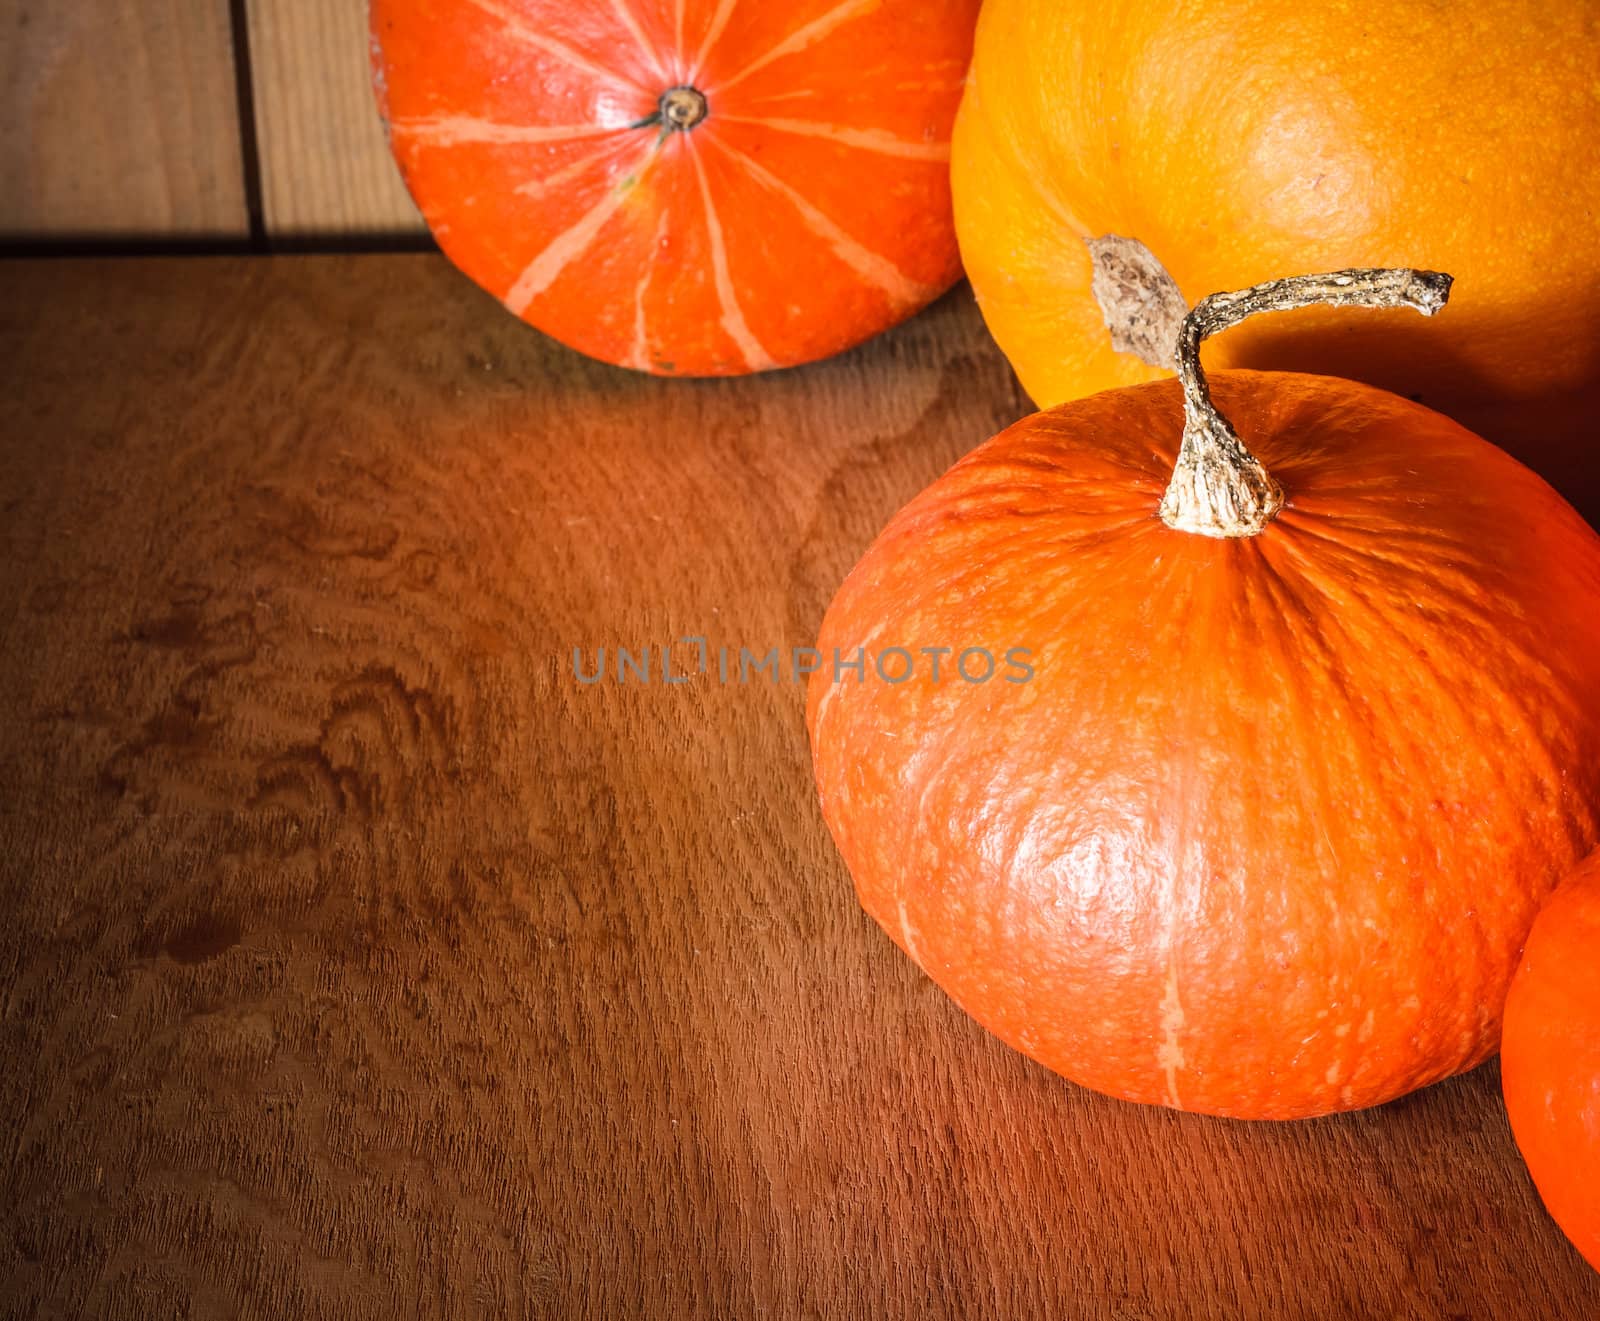 Pumpkins on grunge wooden backdrop, background table. Autumn, halloween, pumpkin, copyspace